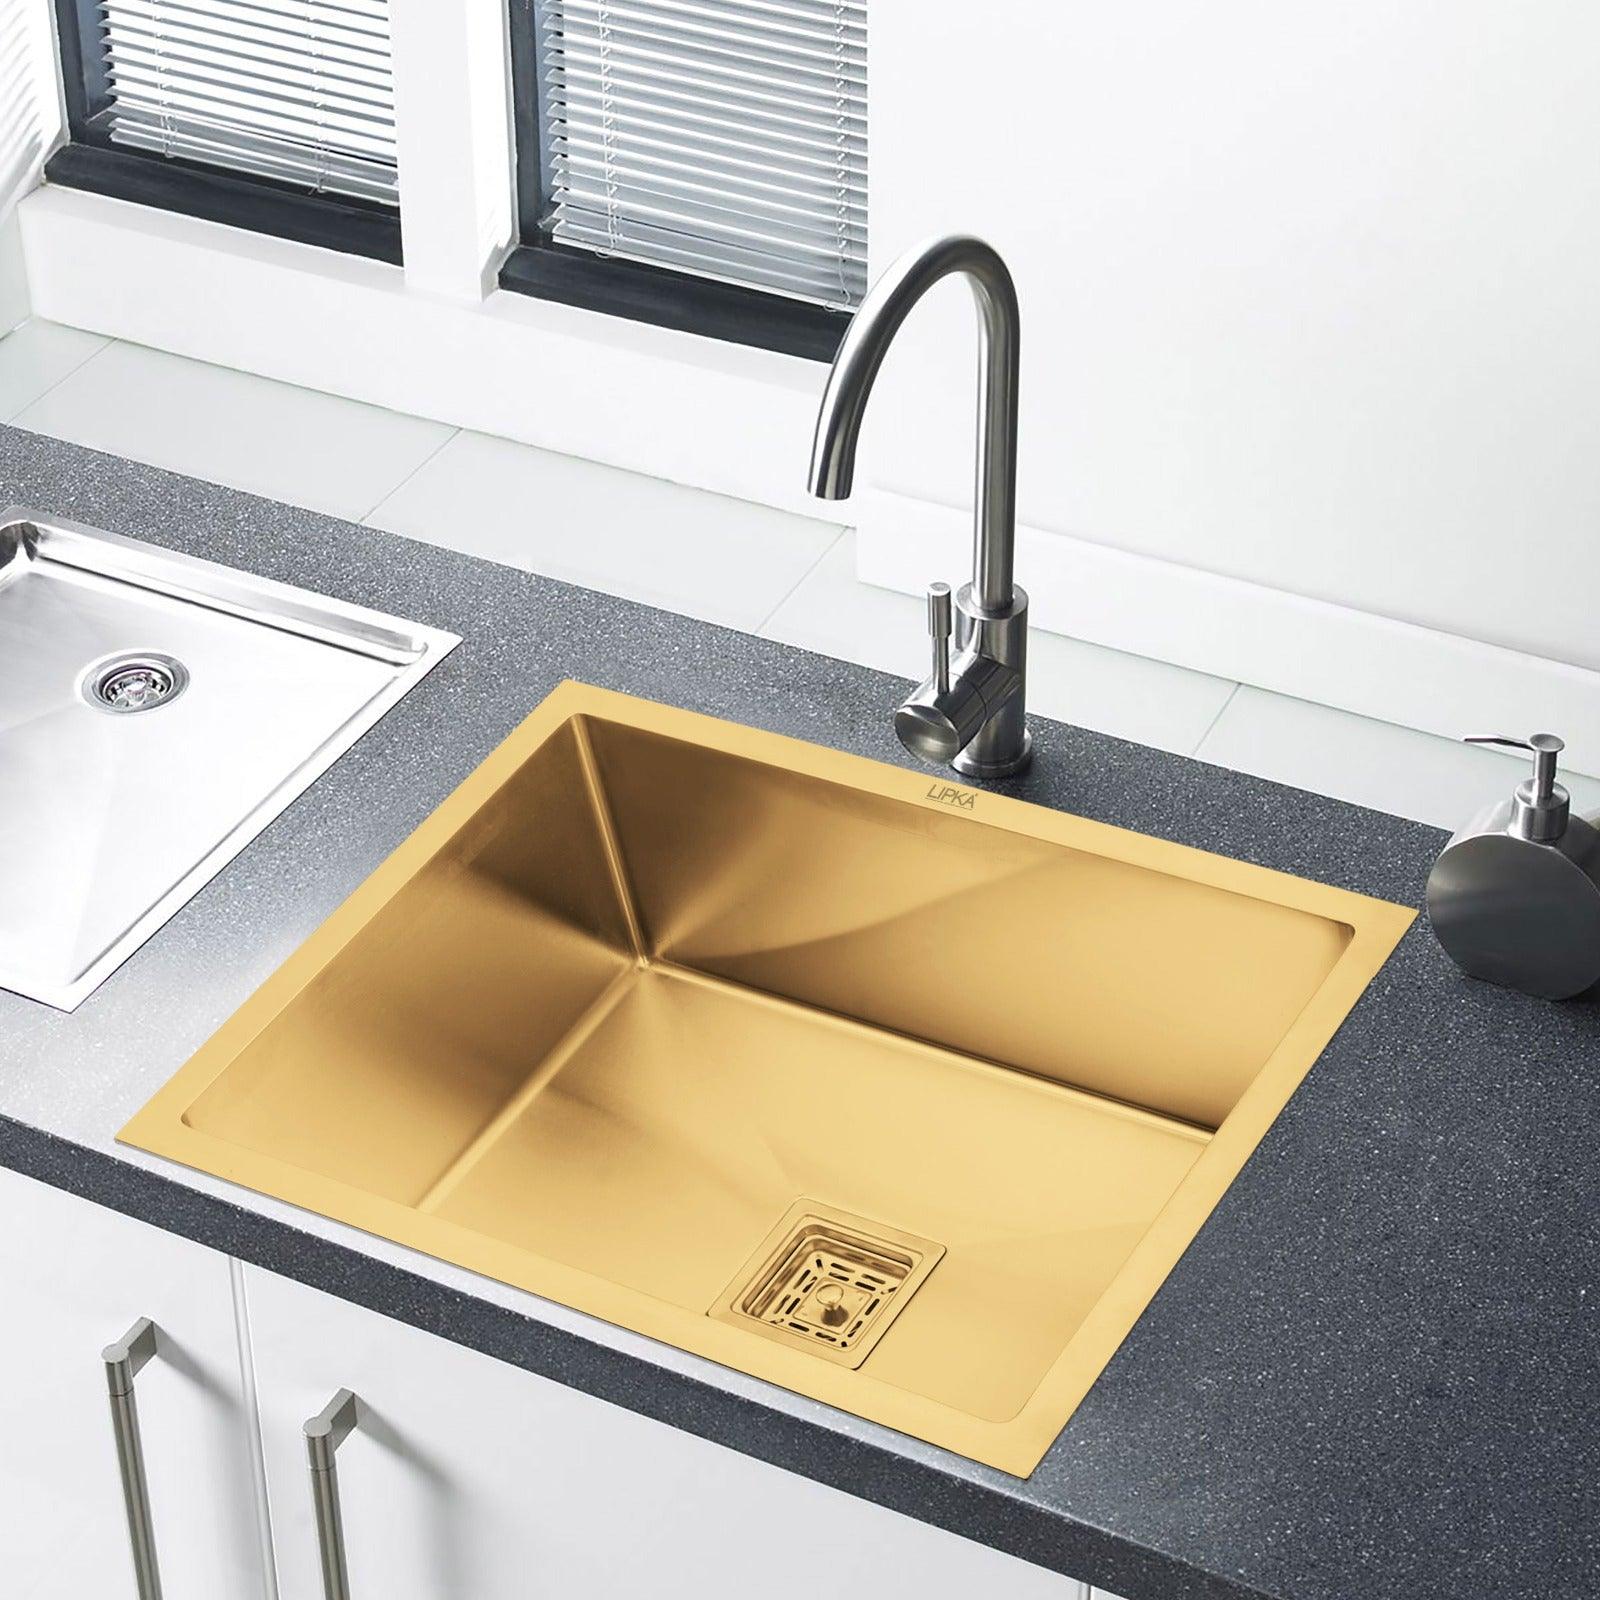 Handmade Yellow Gold PVD Coated Single Bowl Kitchen Sink (24 x 18 x 10 Inches) - LIPKA - Lipka Home